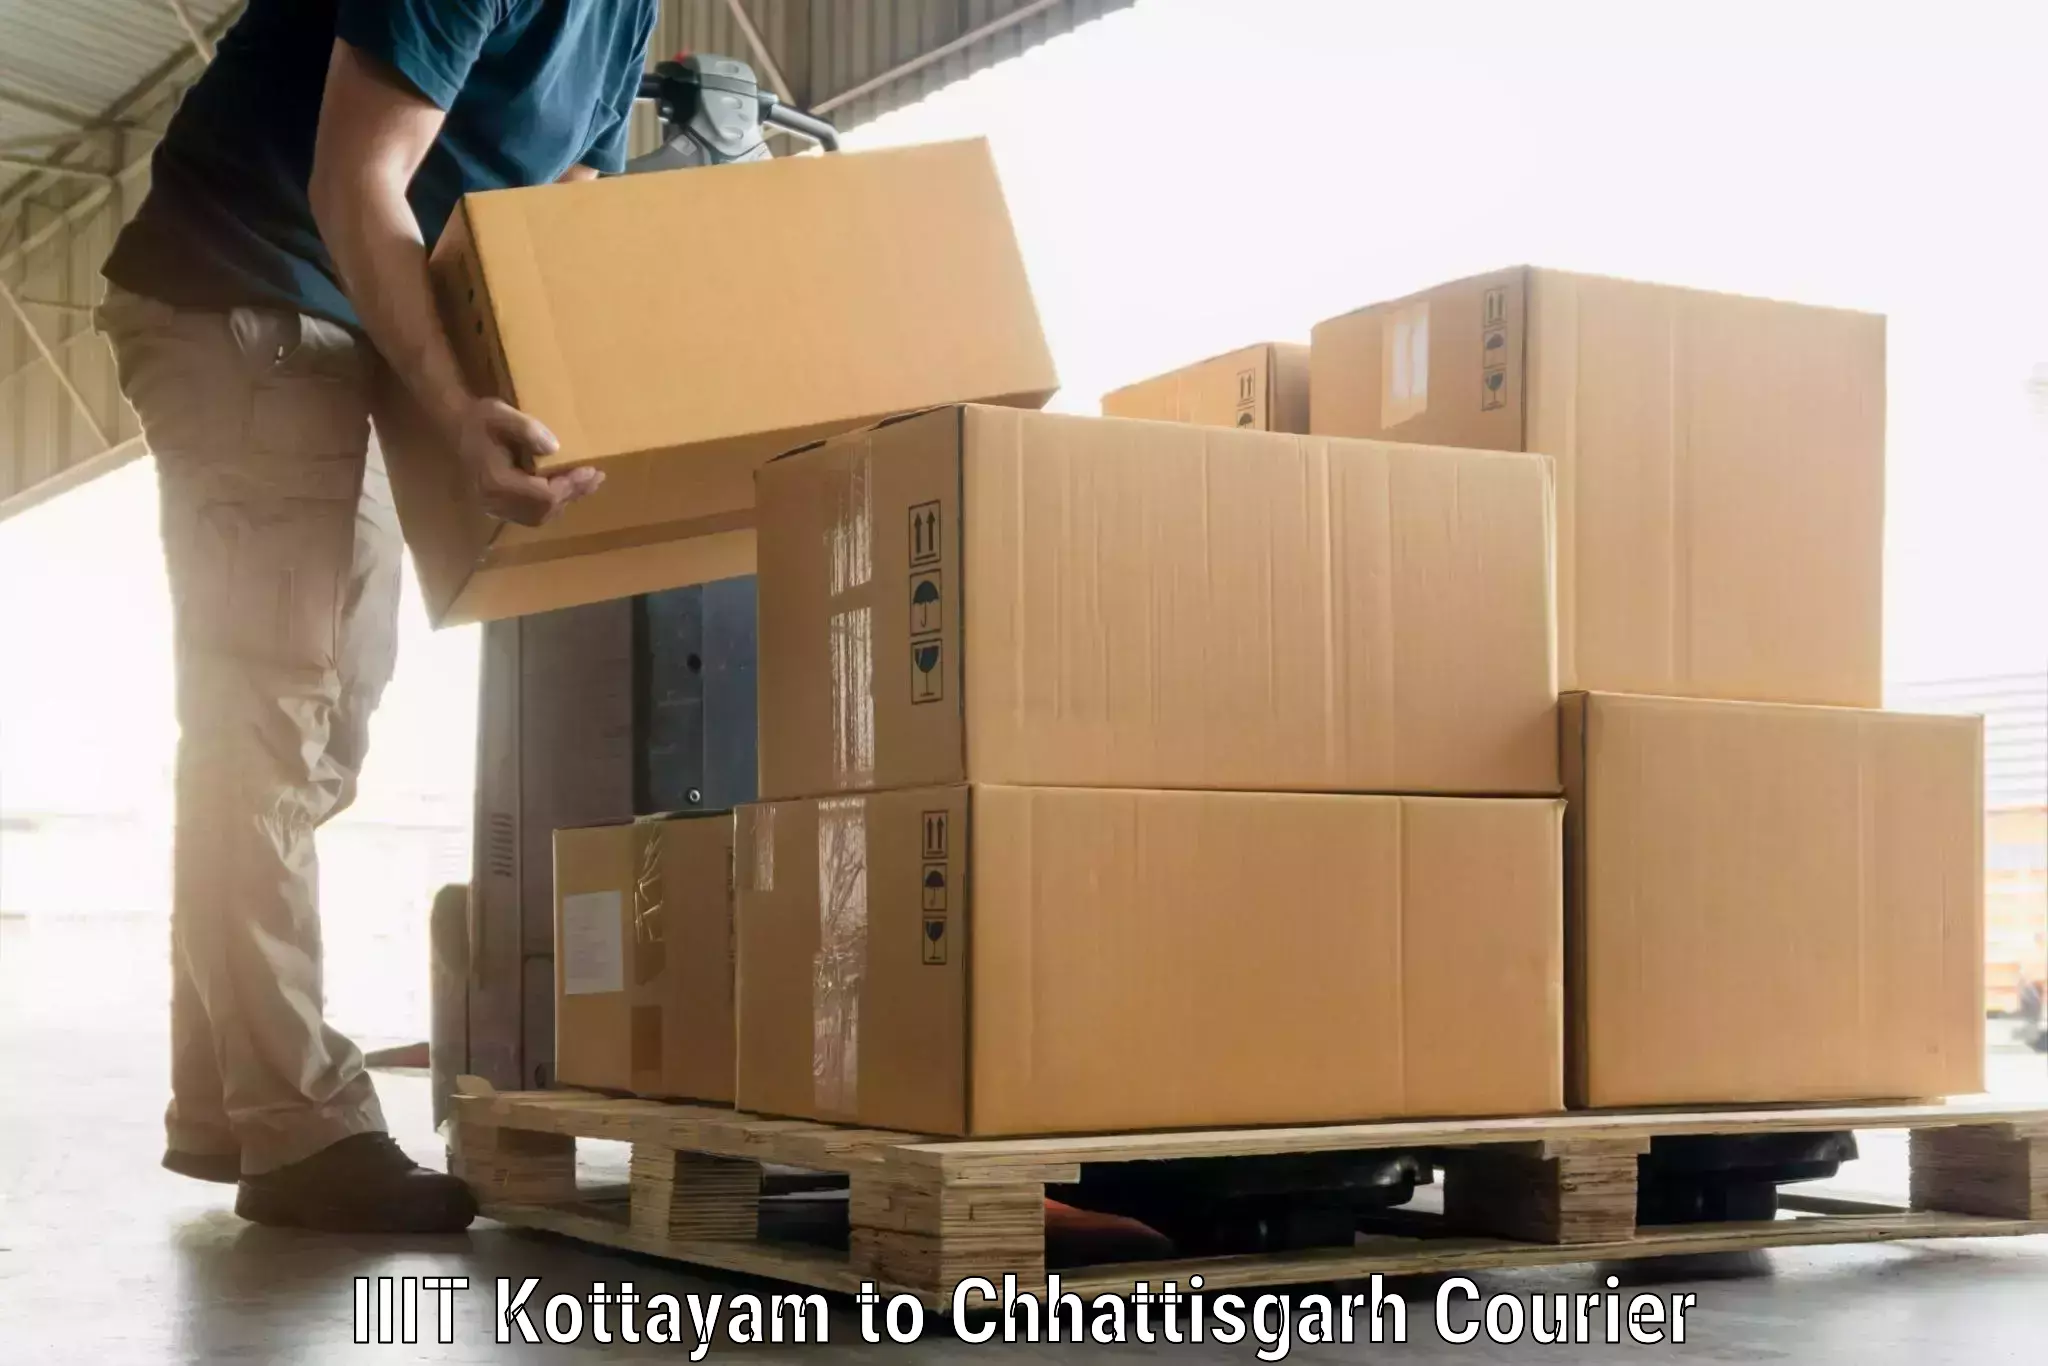 Luggage shipment specialists IIIT Kottayam to Chhattisgarh